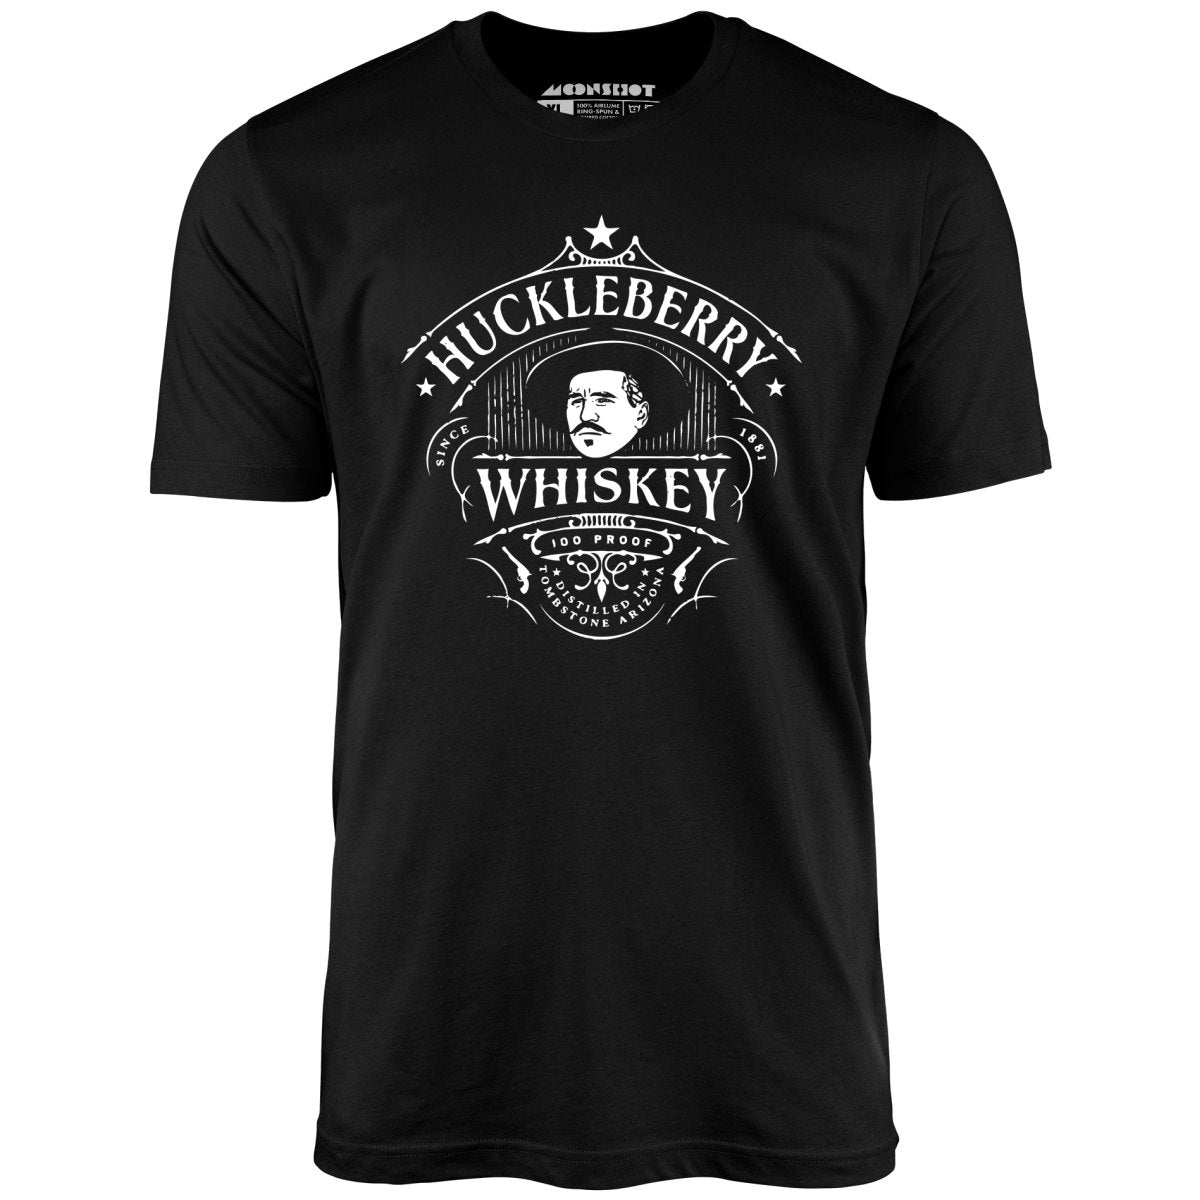 Huckleberry Whiskey - Unisex T-Shirt